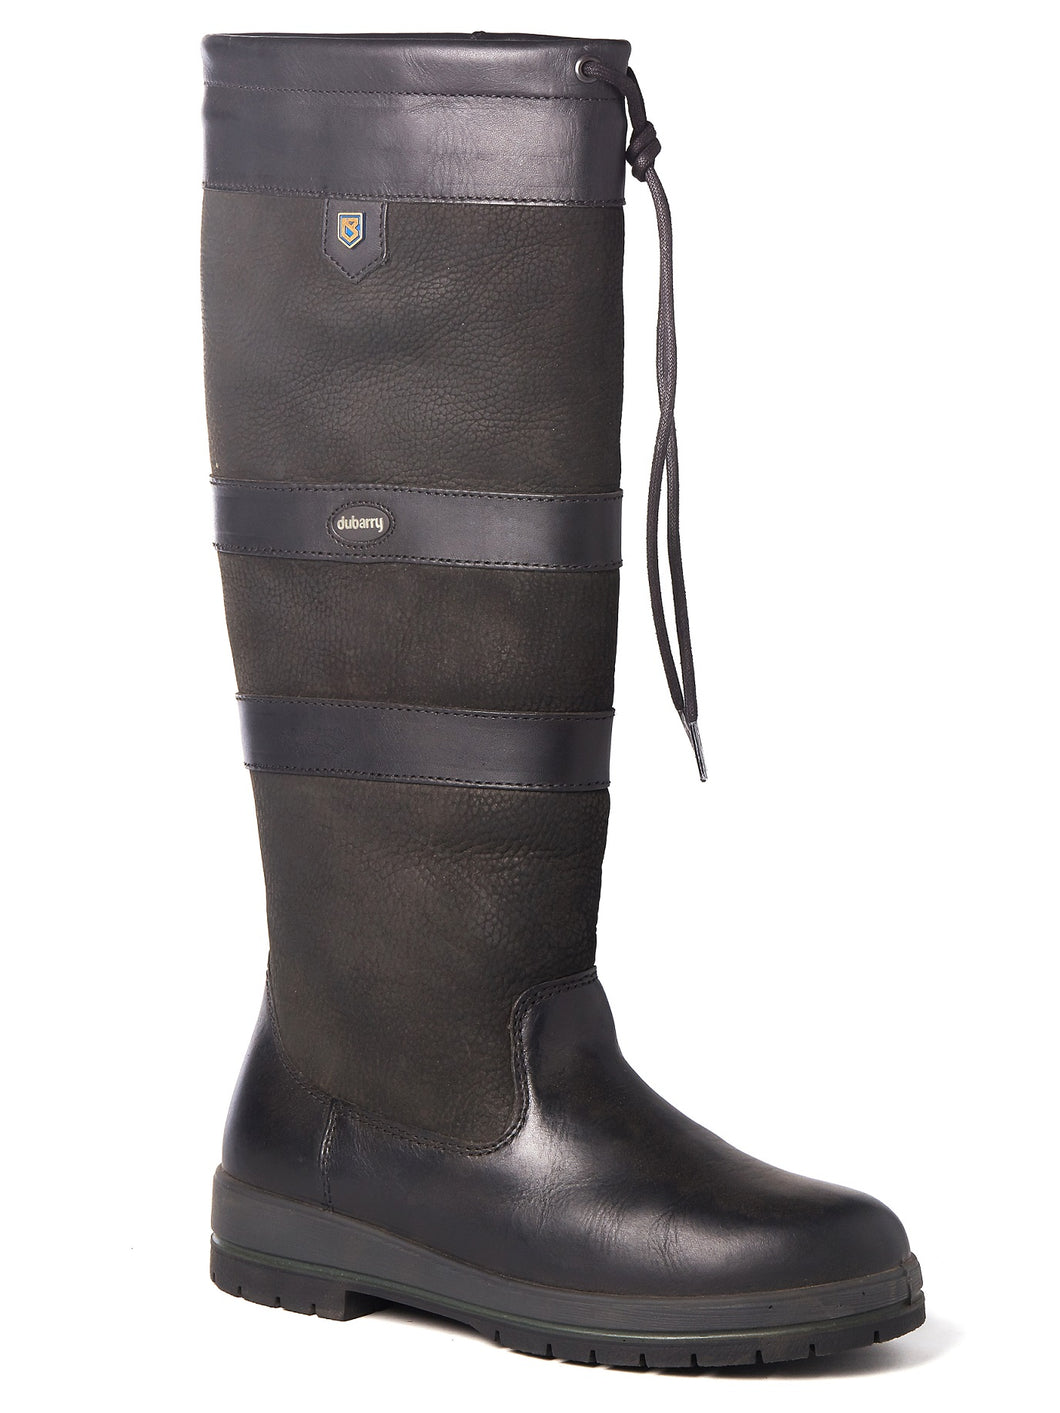 DUBARRY Galway Boots - Ladies Waterproof Gore-Tex Leather - Black